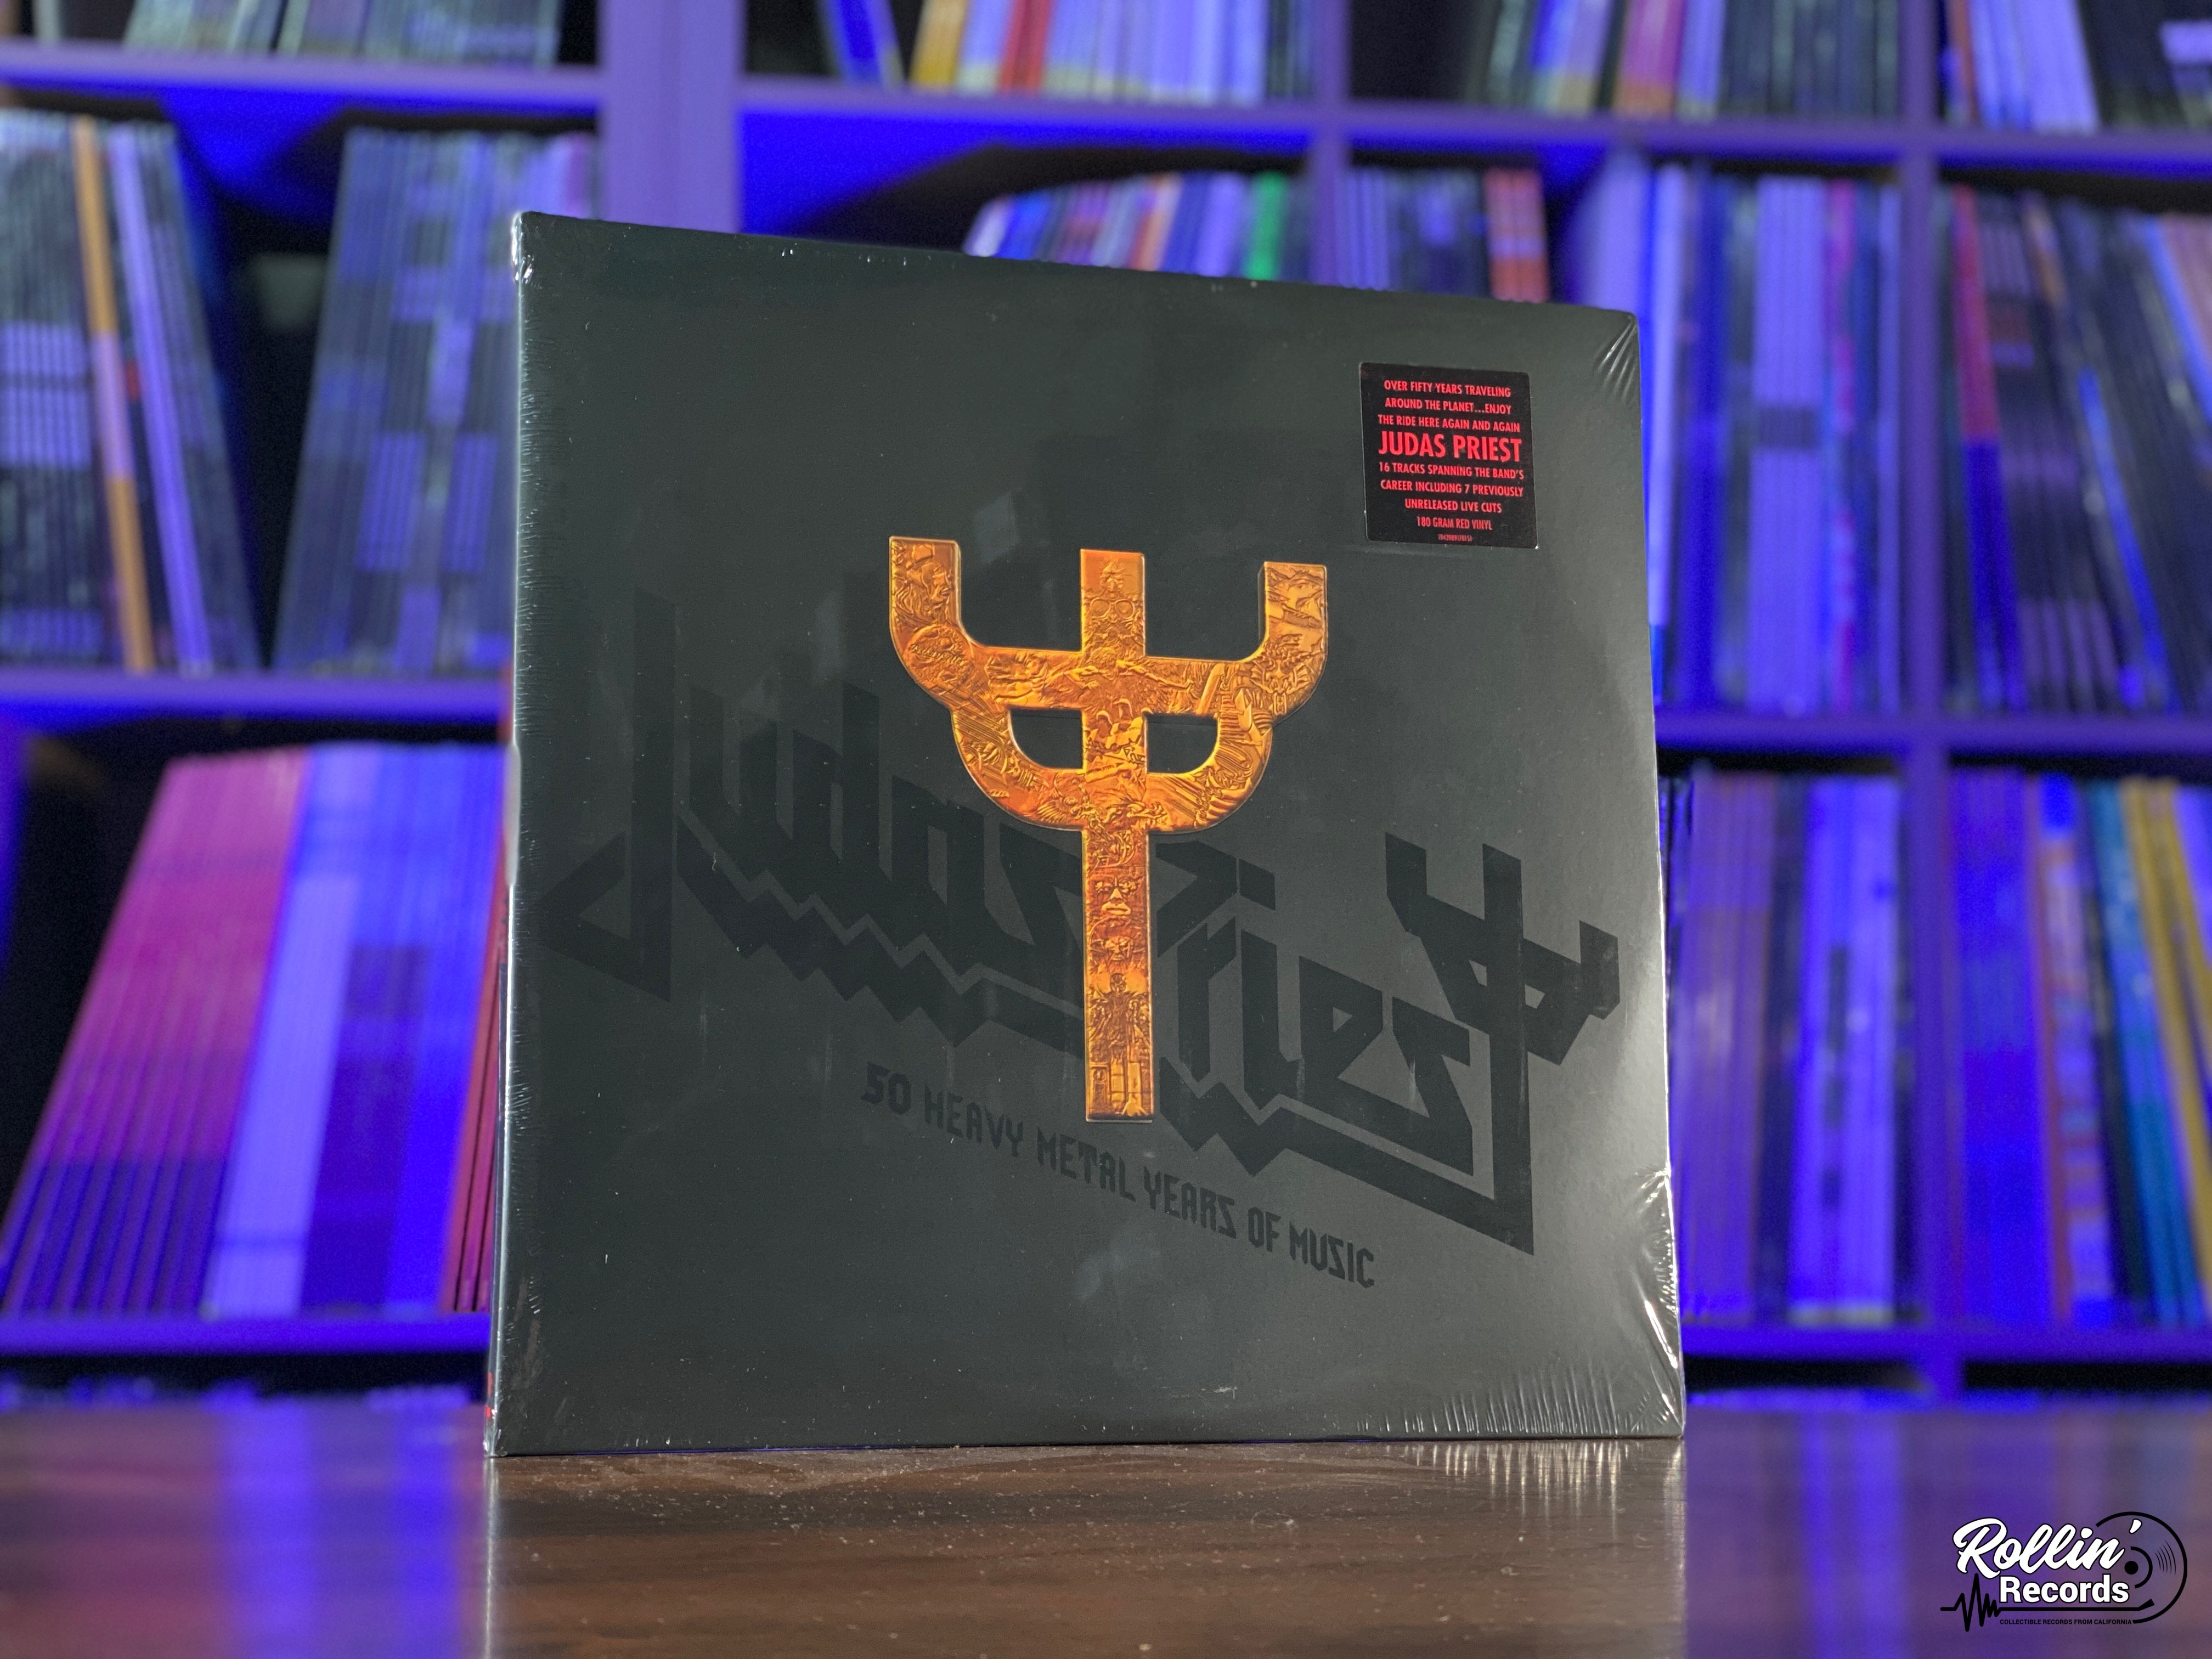 Reflections - 50 Heavy Metal Years Of Music (LP) – Judas Priest